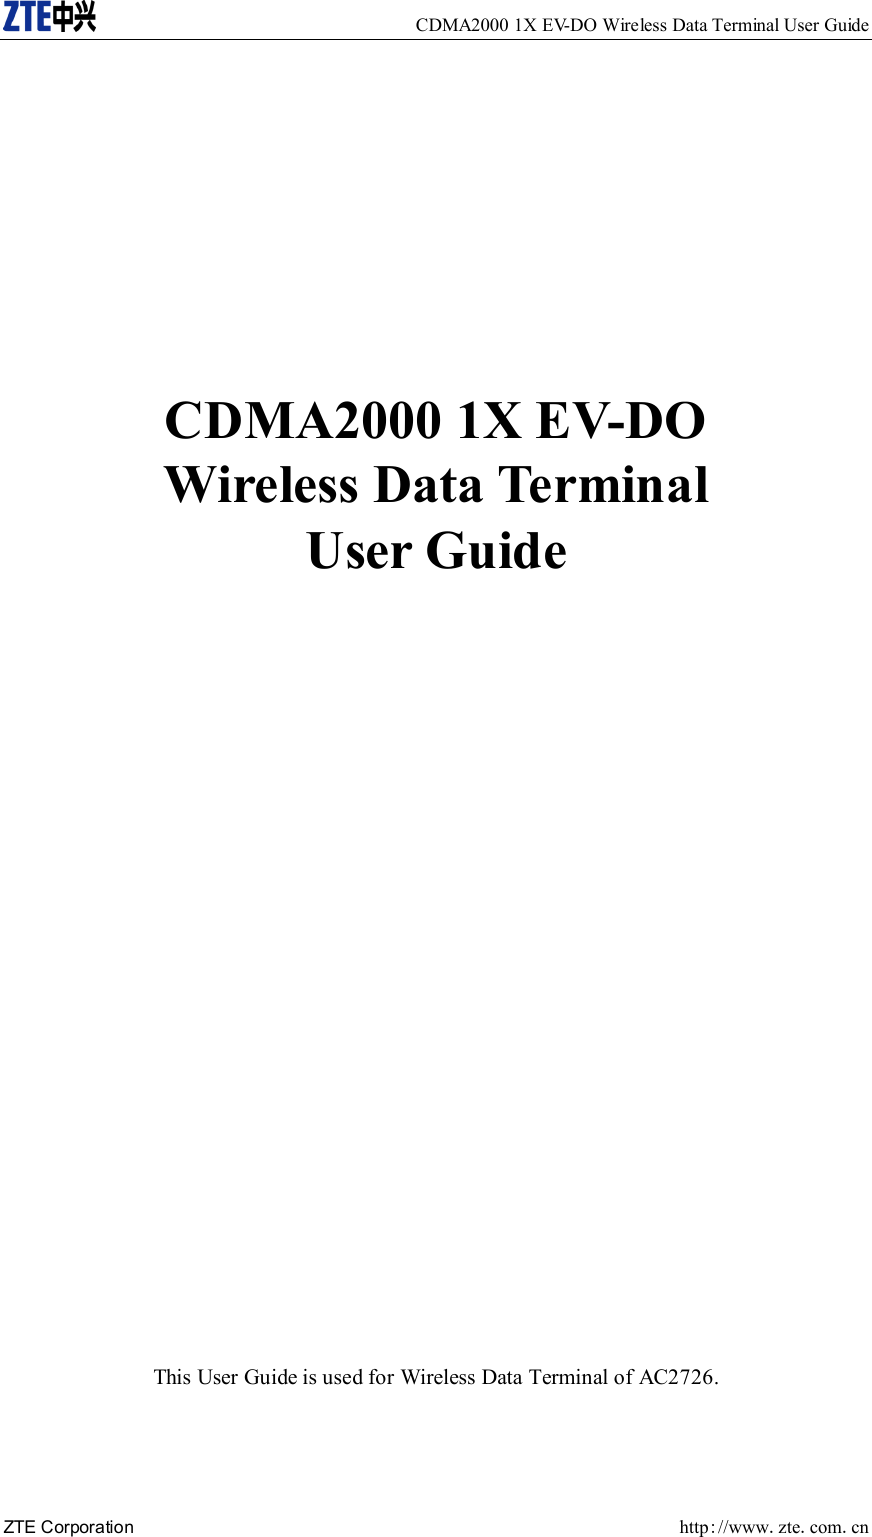   CDMA2000 1X EV-DO Wireless Data Terminal User Guide ZTE Corporation  http://www.zte.com.cn        CDMA2000 1X EV-DO Wireless Data Terminal User Guide                         This User Guide is used for Wireless Data Terminal of AC2726. 